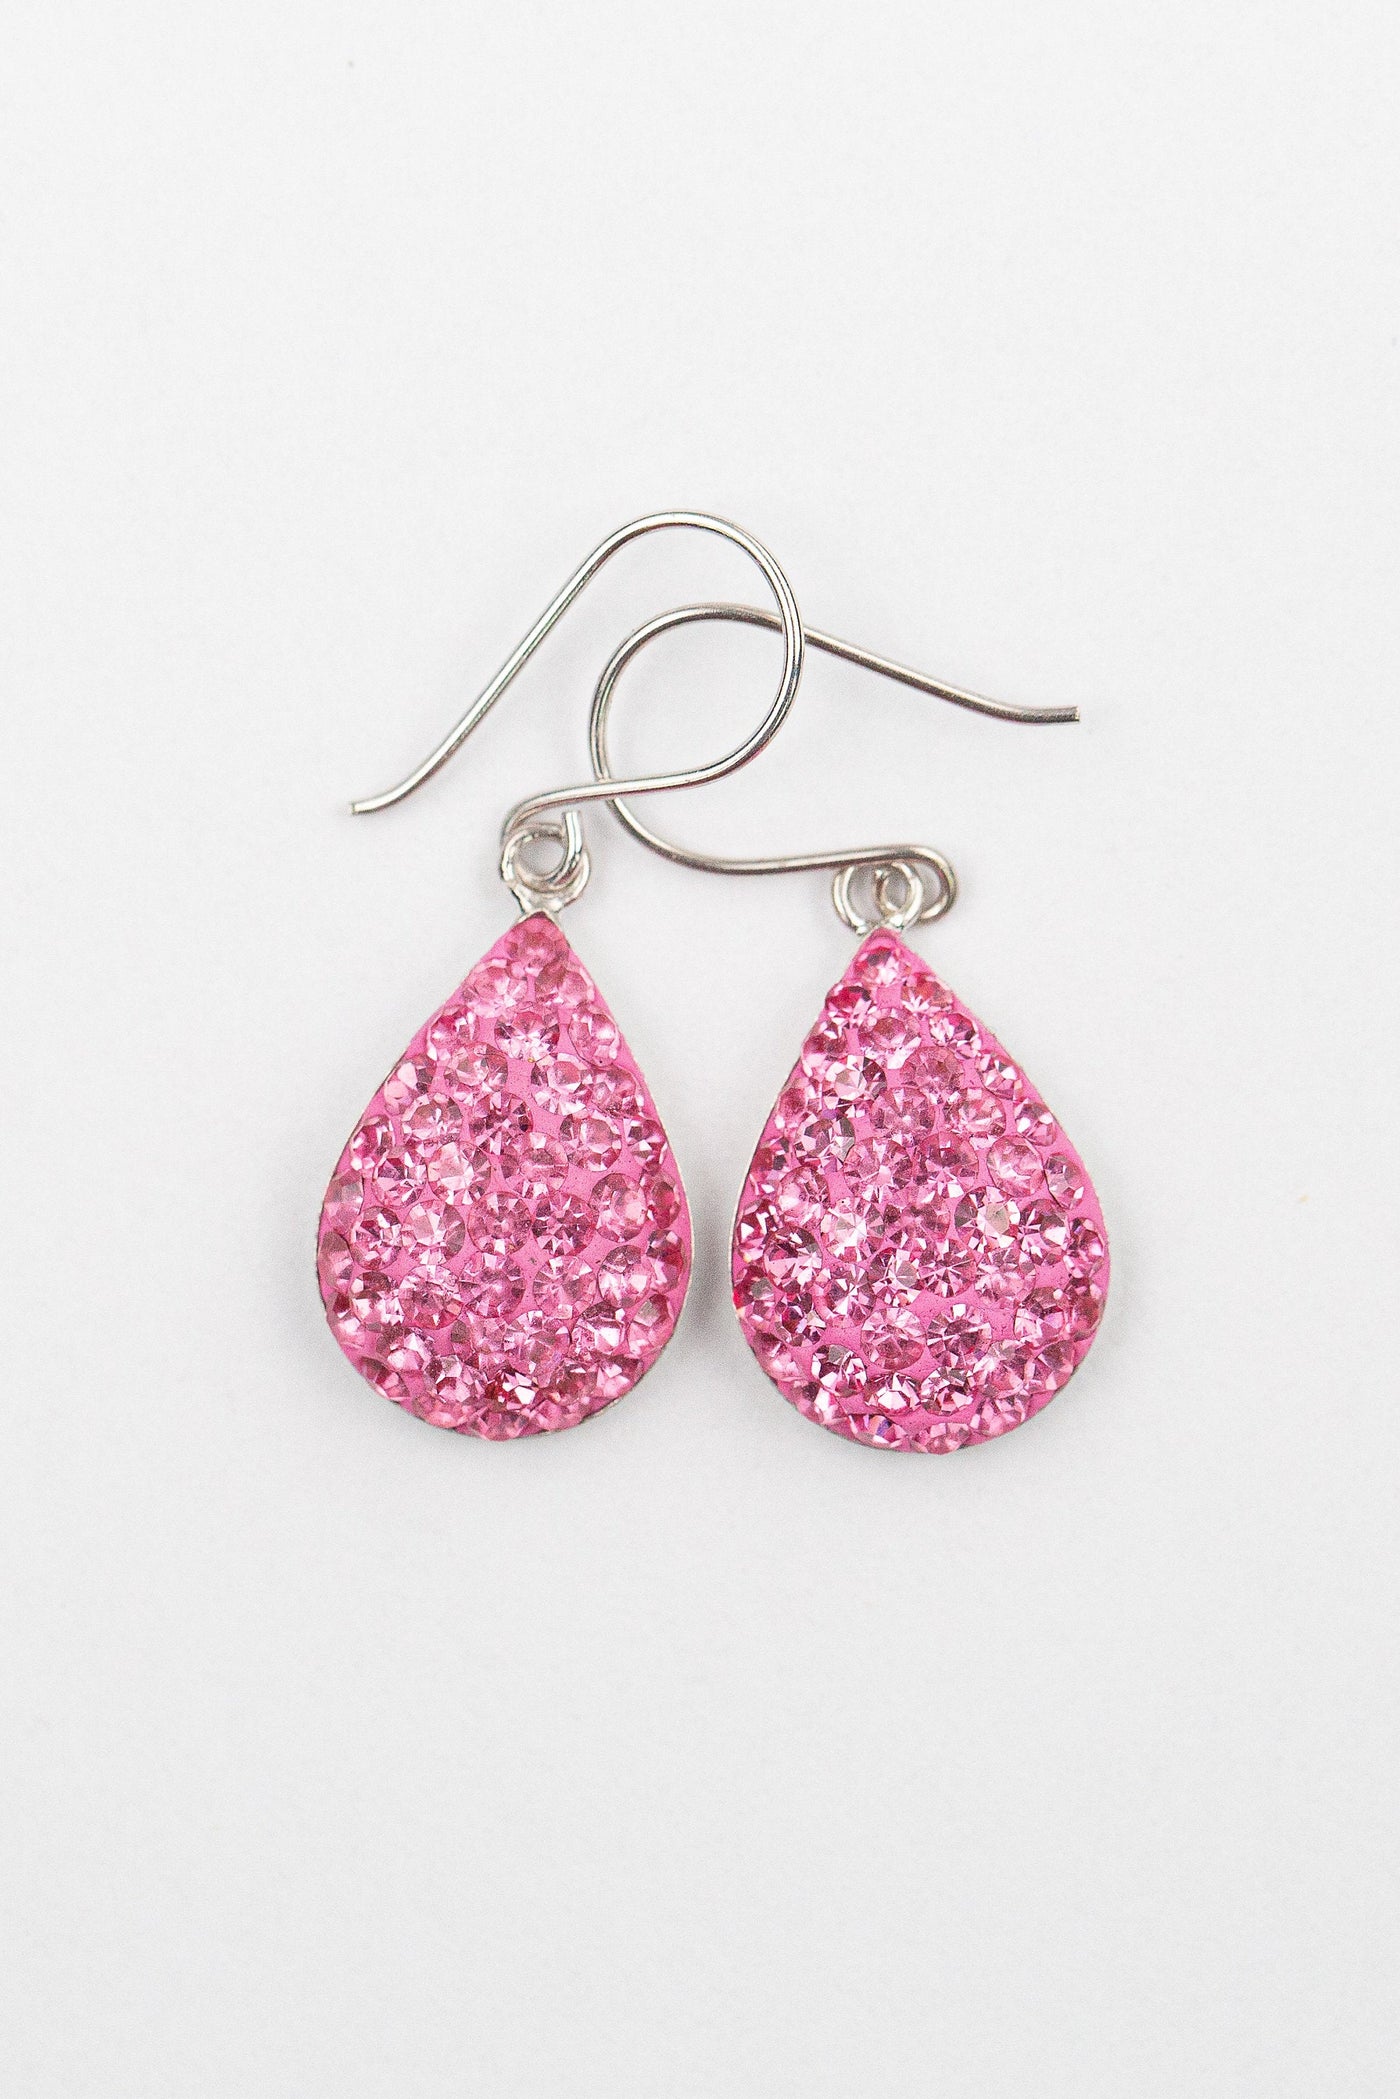 Swarovski Crystal Round Teardrop Silver Earrings in Rose Pink | Annie and Sisters